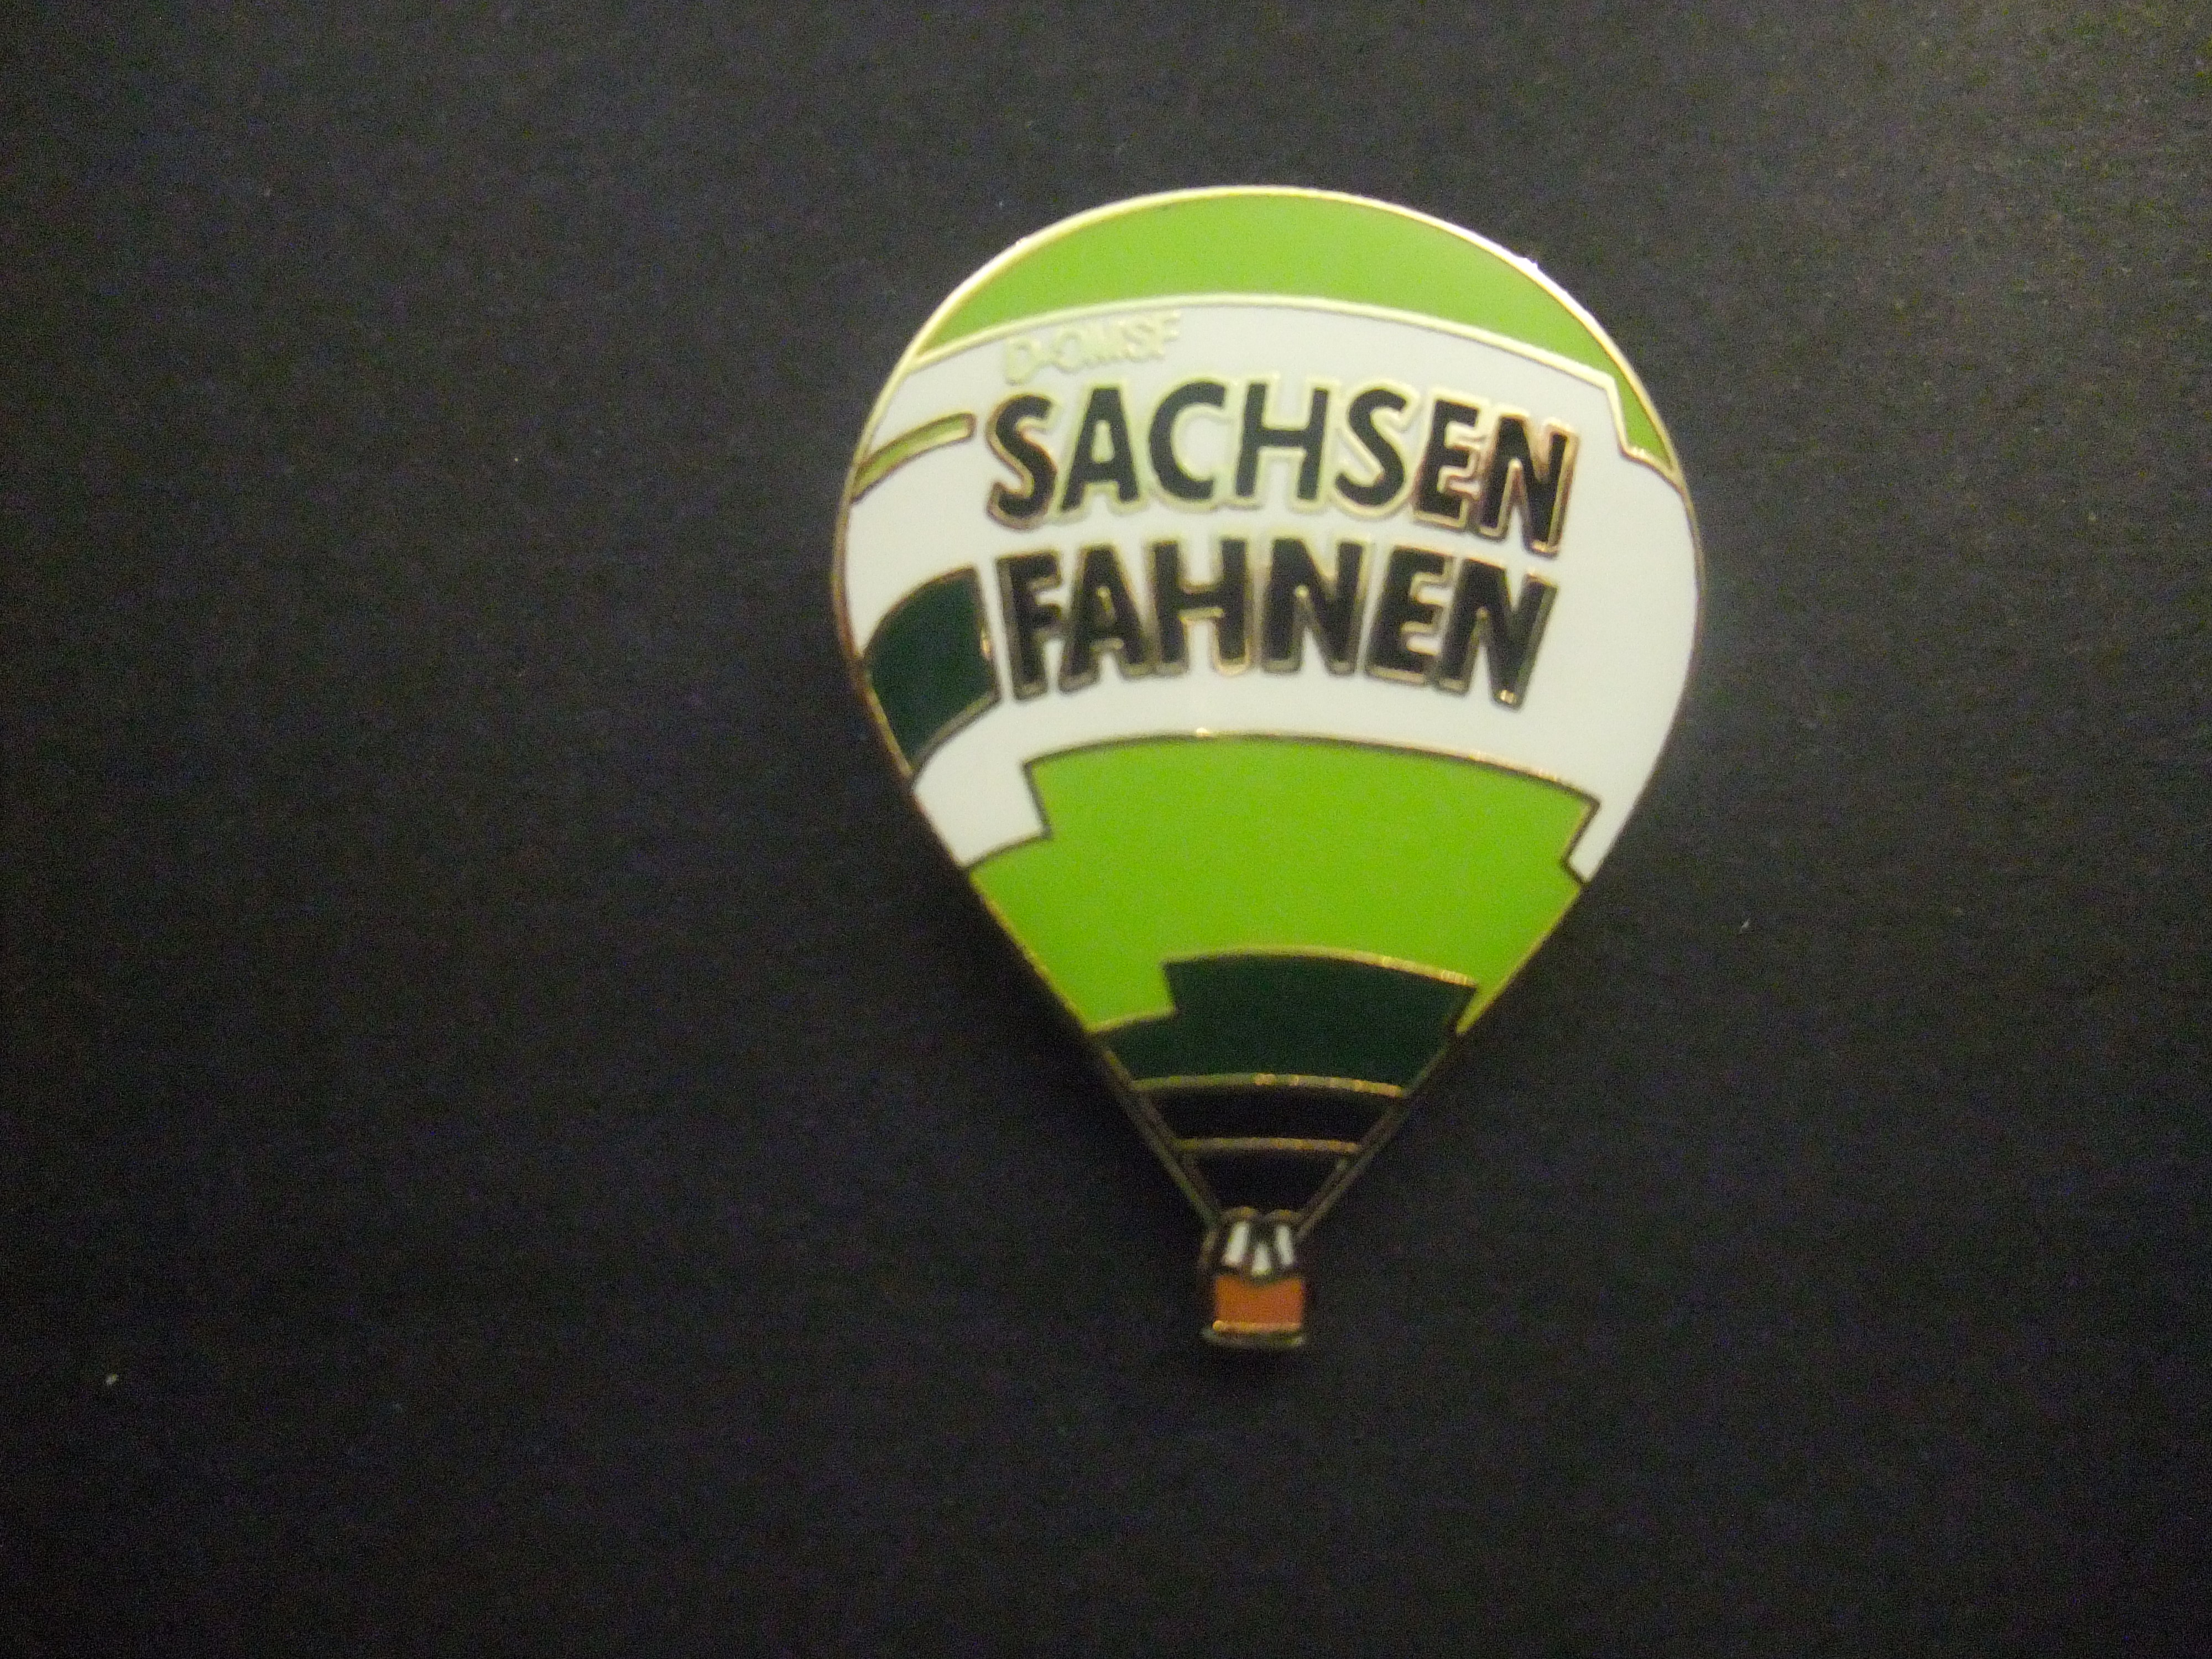 Sachsen Fahnen fabrikant van  textieladvertentiemedia Duitsland luchtballon